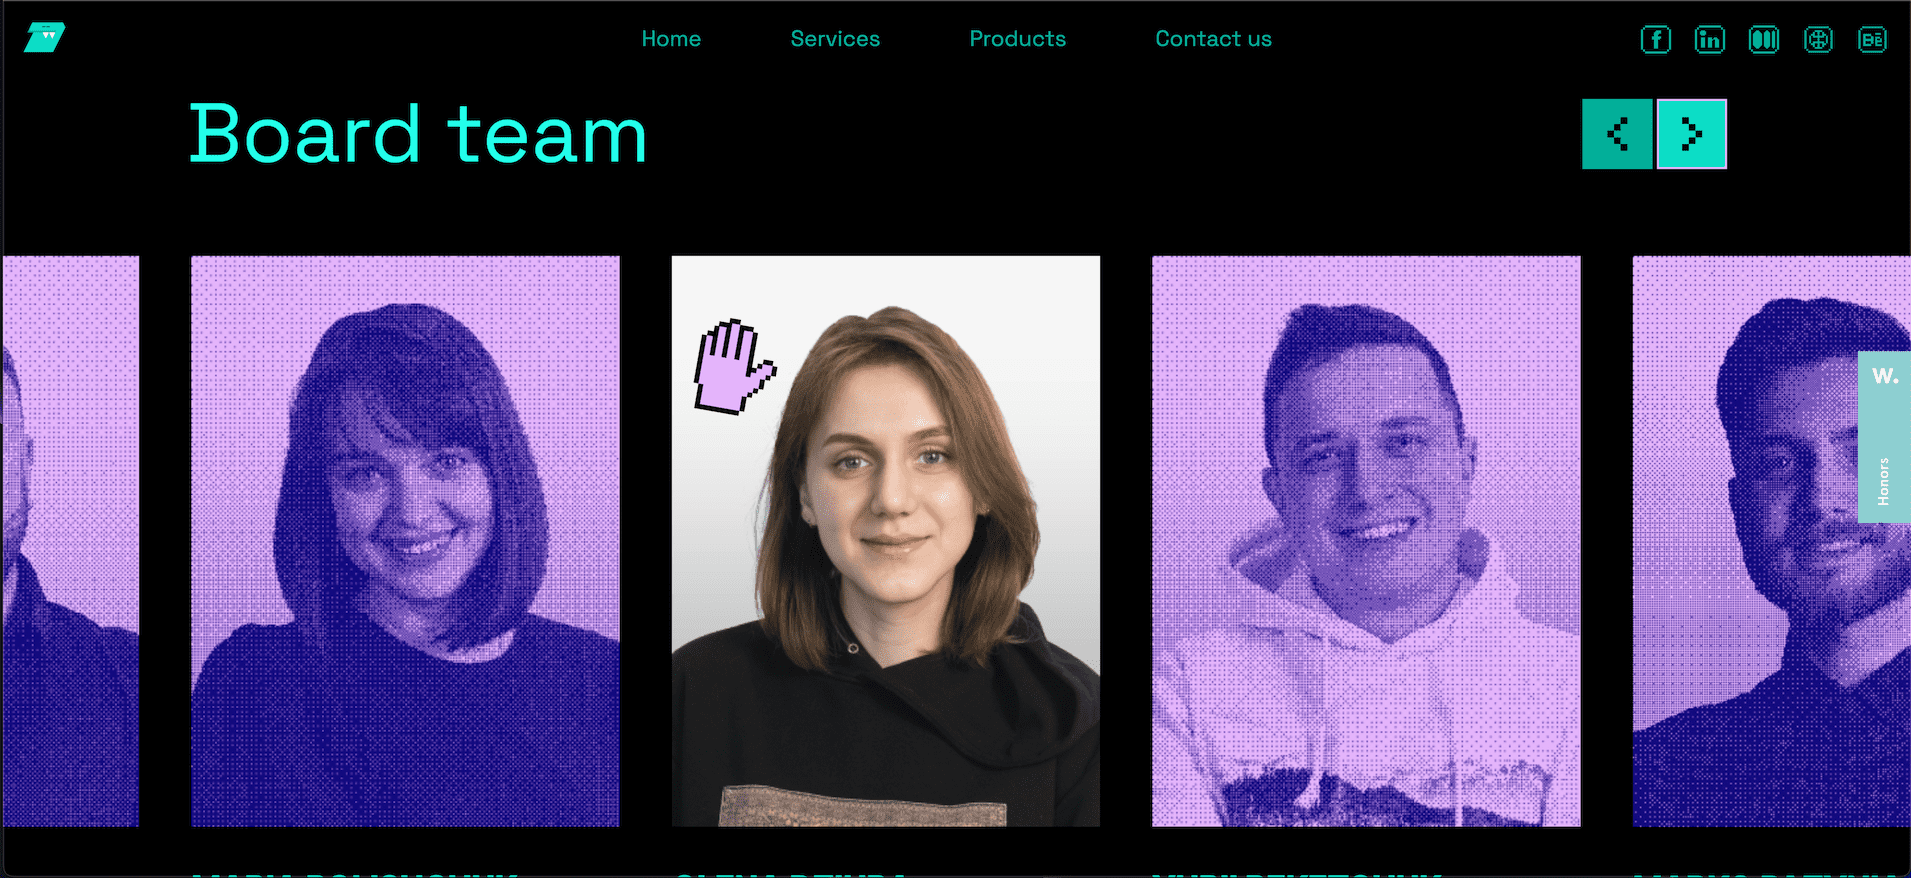  Screen shot of 27 nerds website showing staff profile headshots